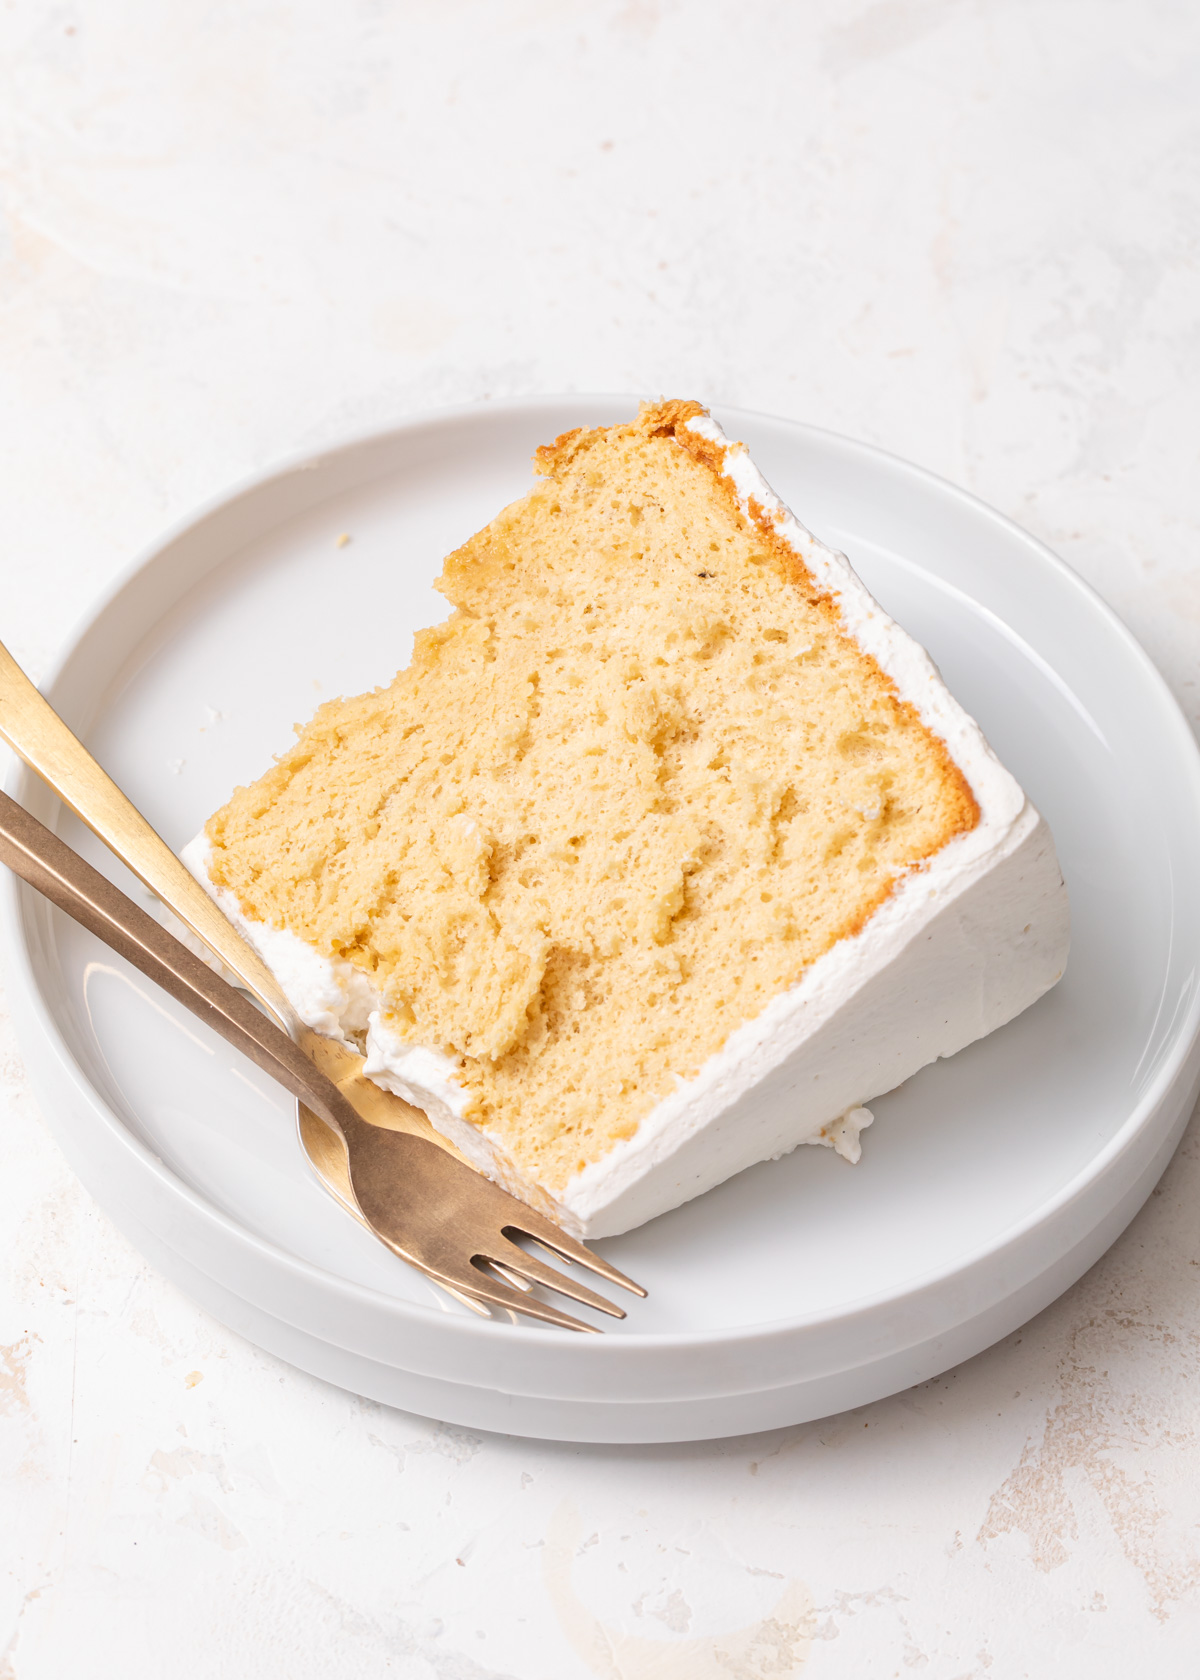 A close-up of a slice of fluffy vanilla chiffon cake